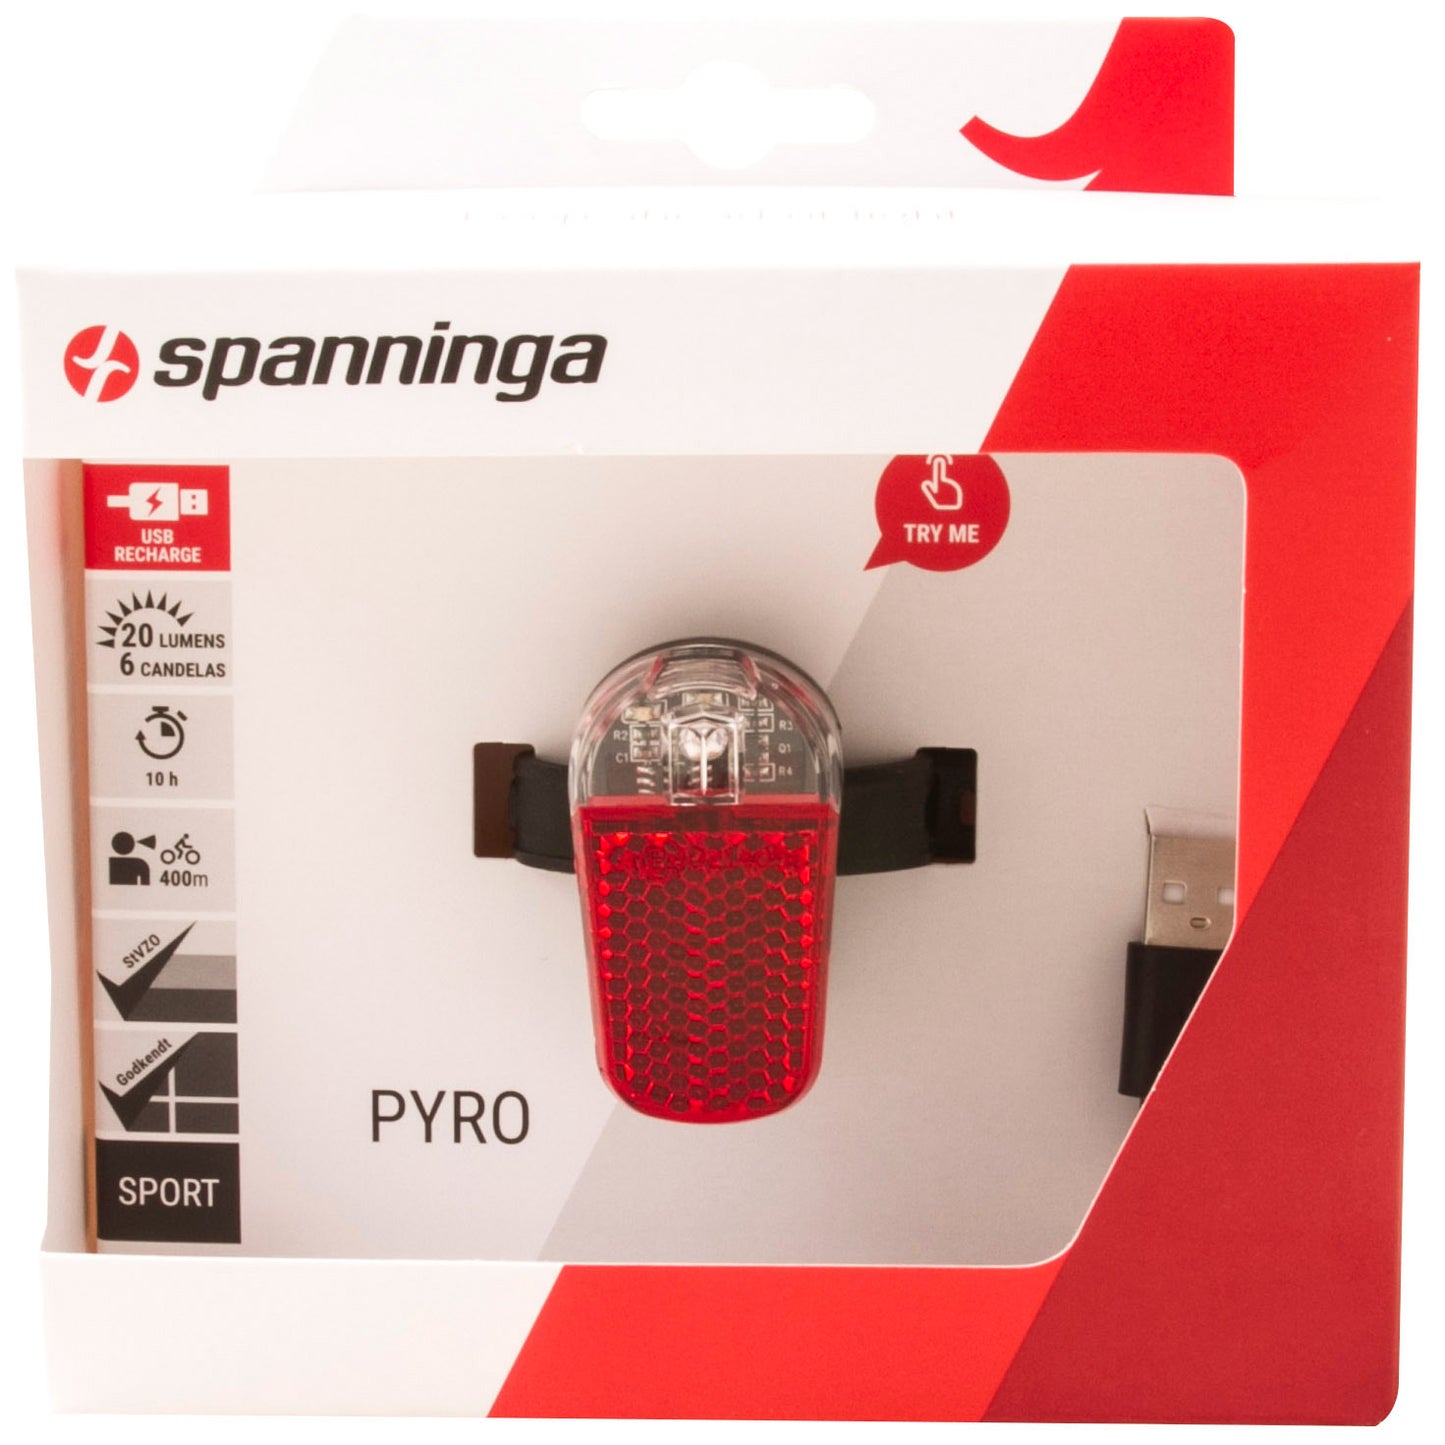 Luz trasera de Spanninga Pyro USB recargable